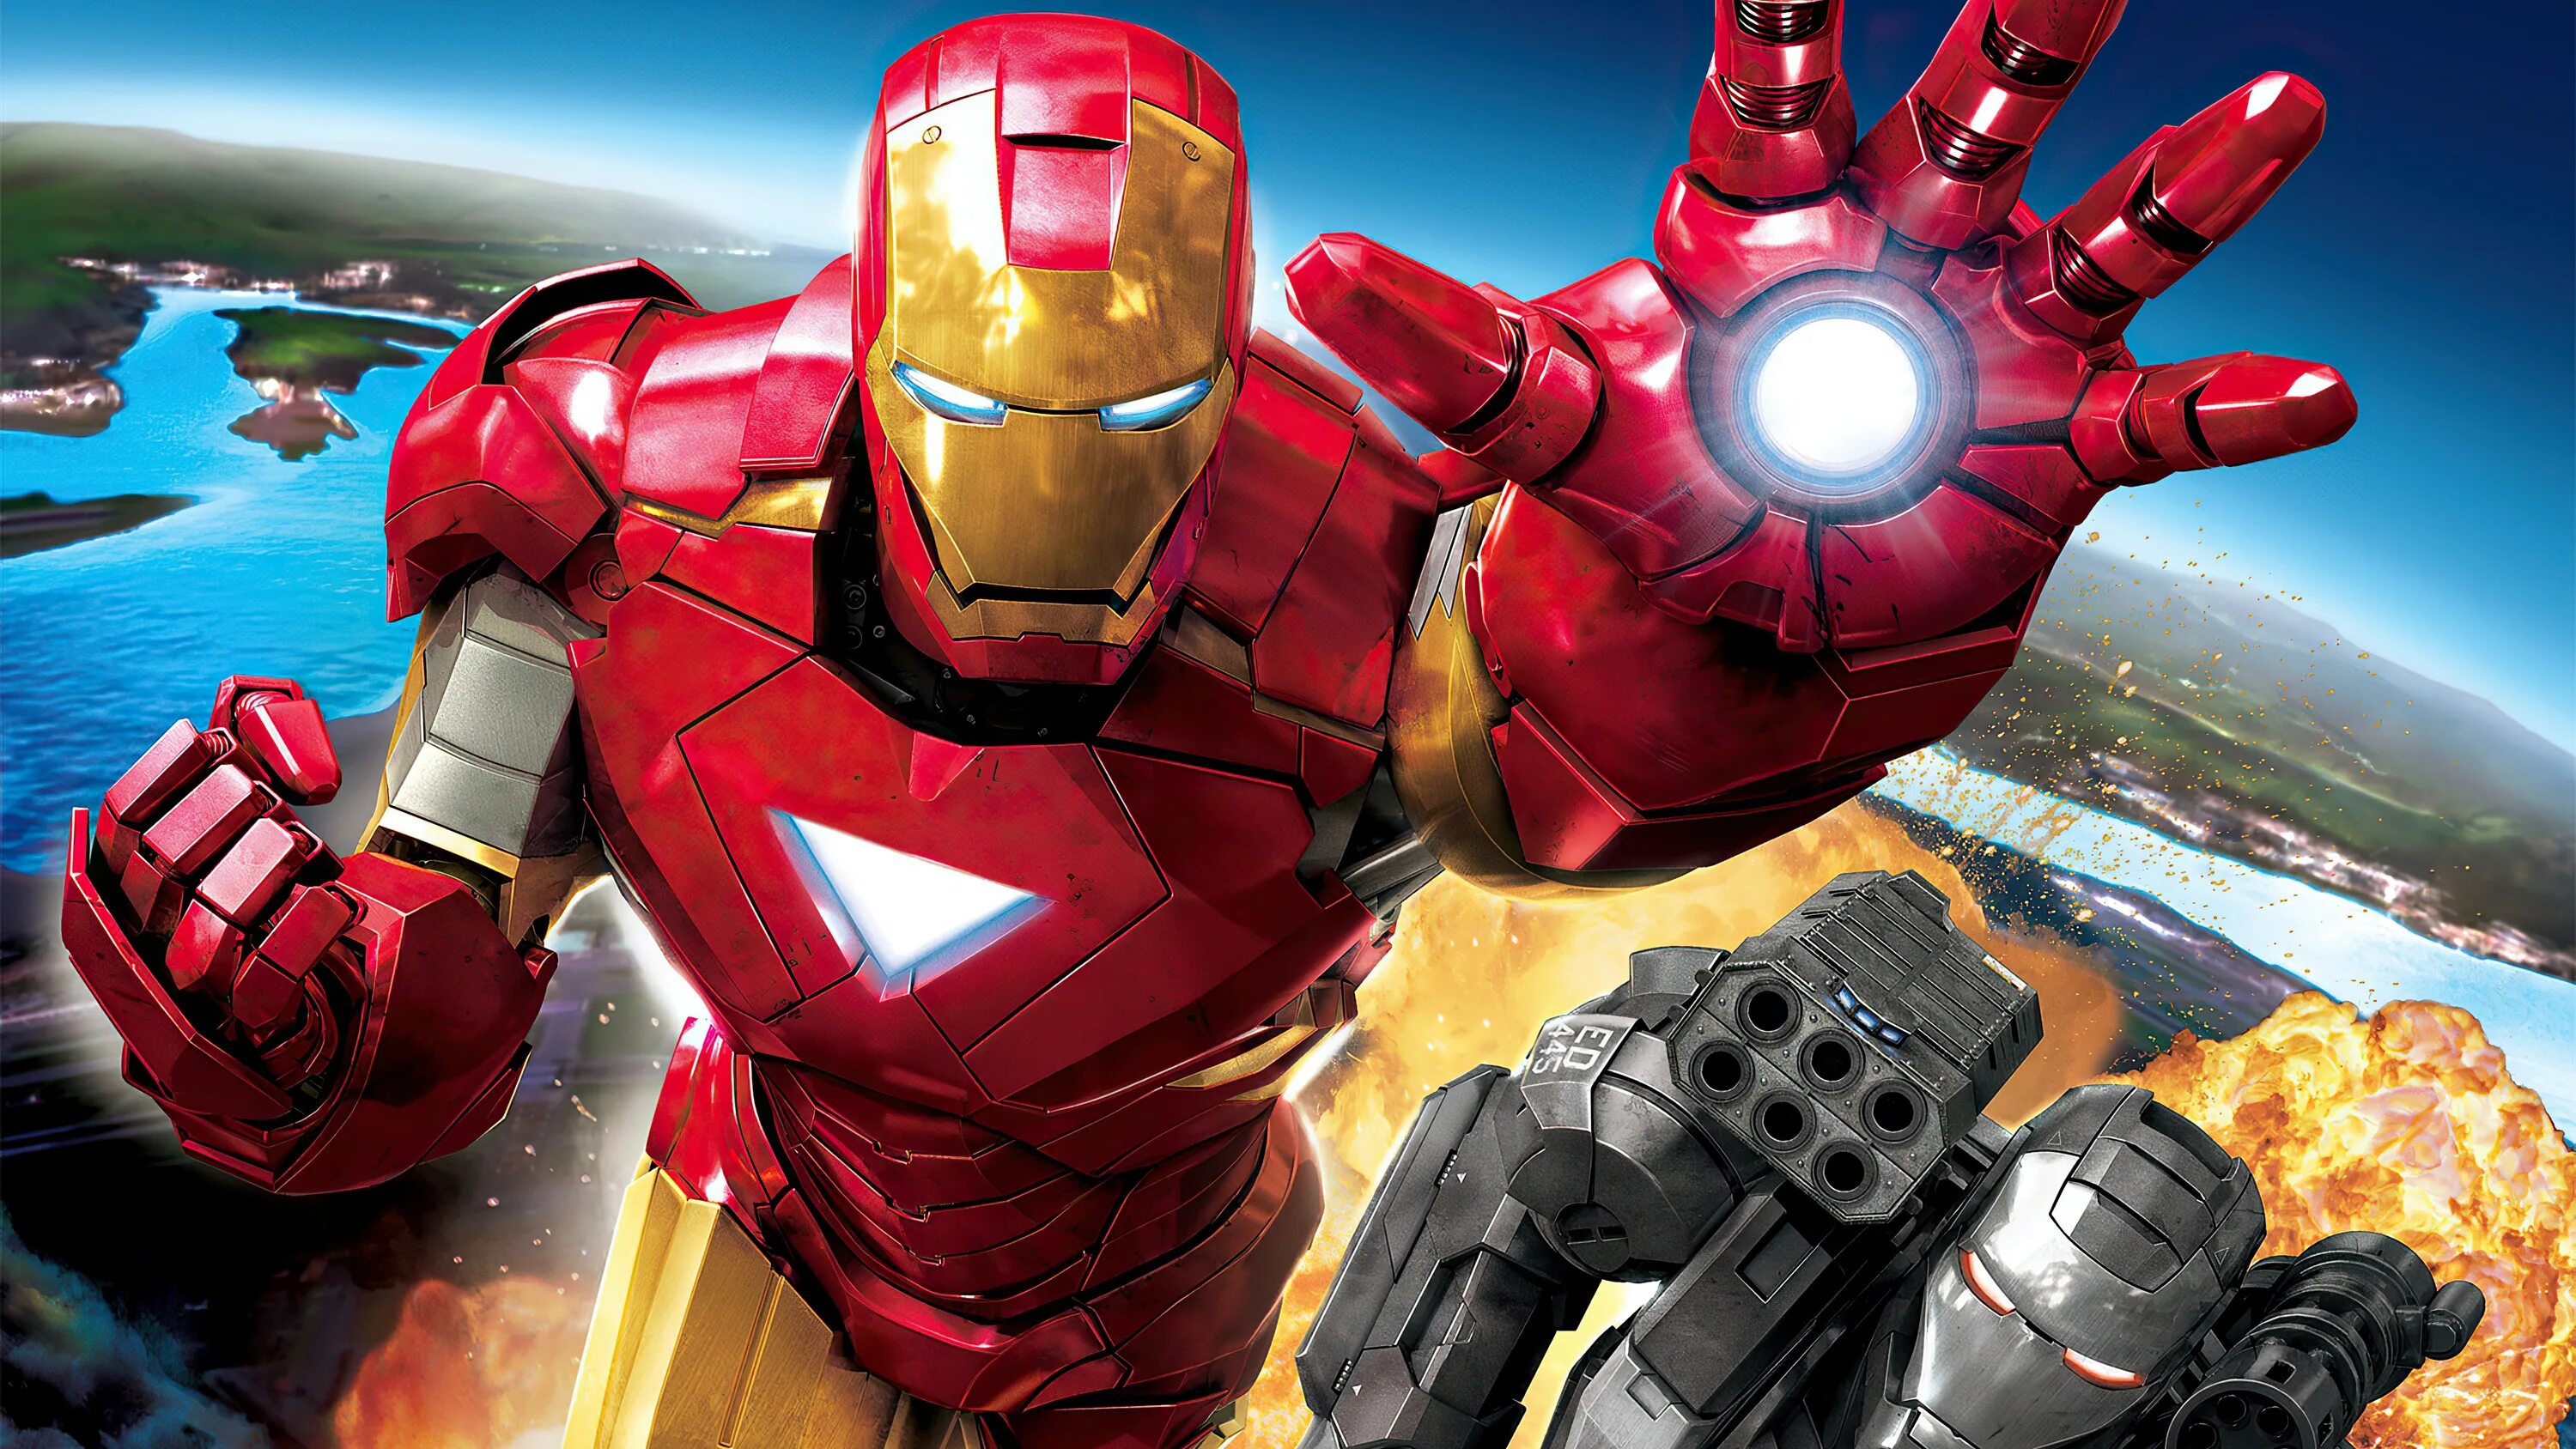 Включи большой железный. Iron man 2 (игра). Железный человек. Железный человек картинки. Железный человек обои.